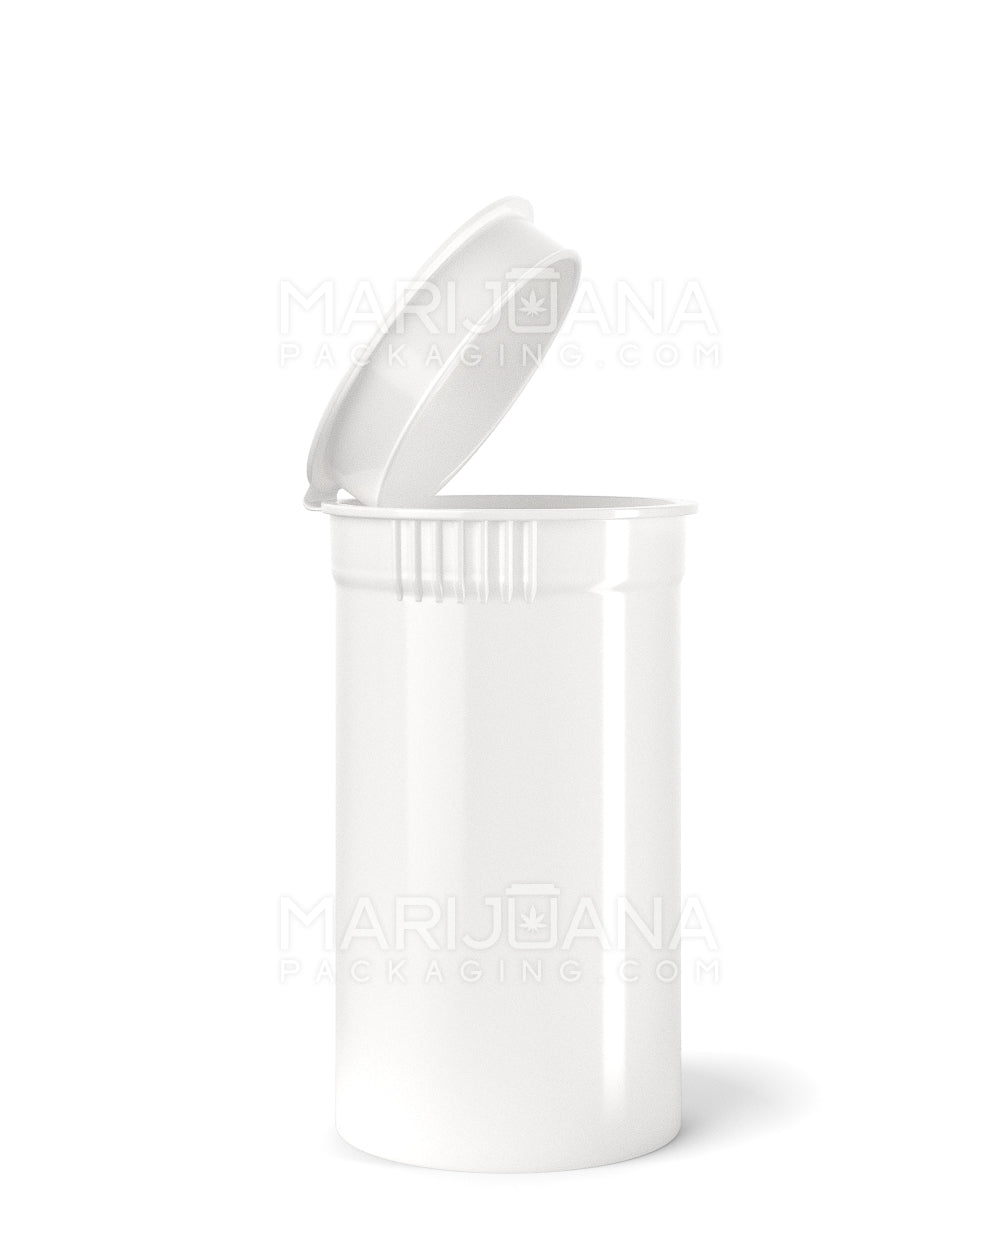 POLLEN GEAR Child Resistant KSC Opaque White Pop Top Bottles | 19dr - 3.5g | Sample